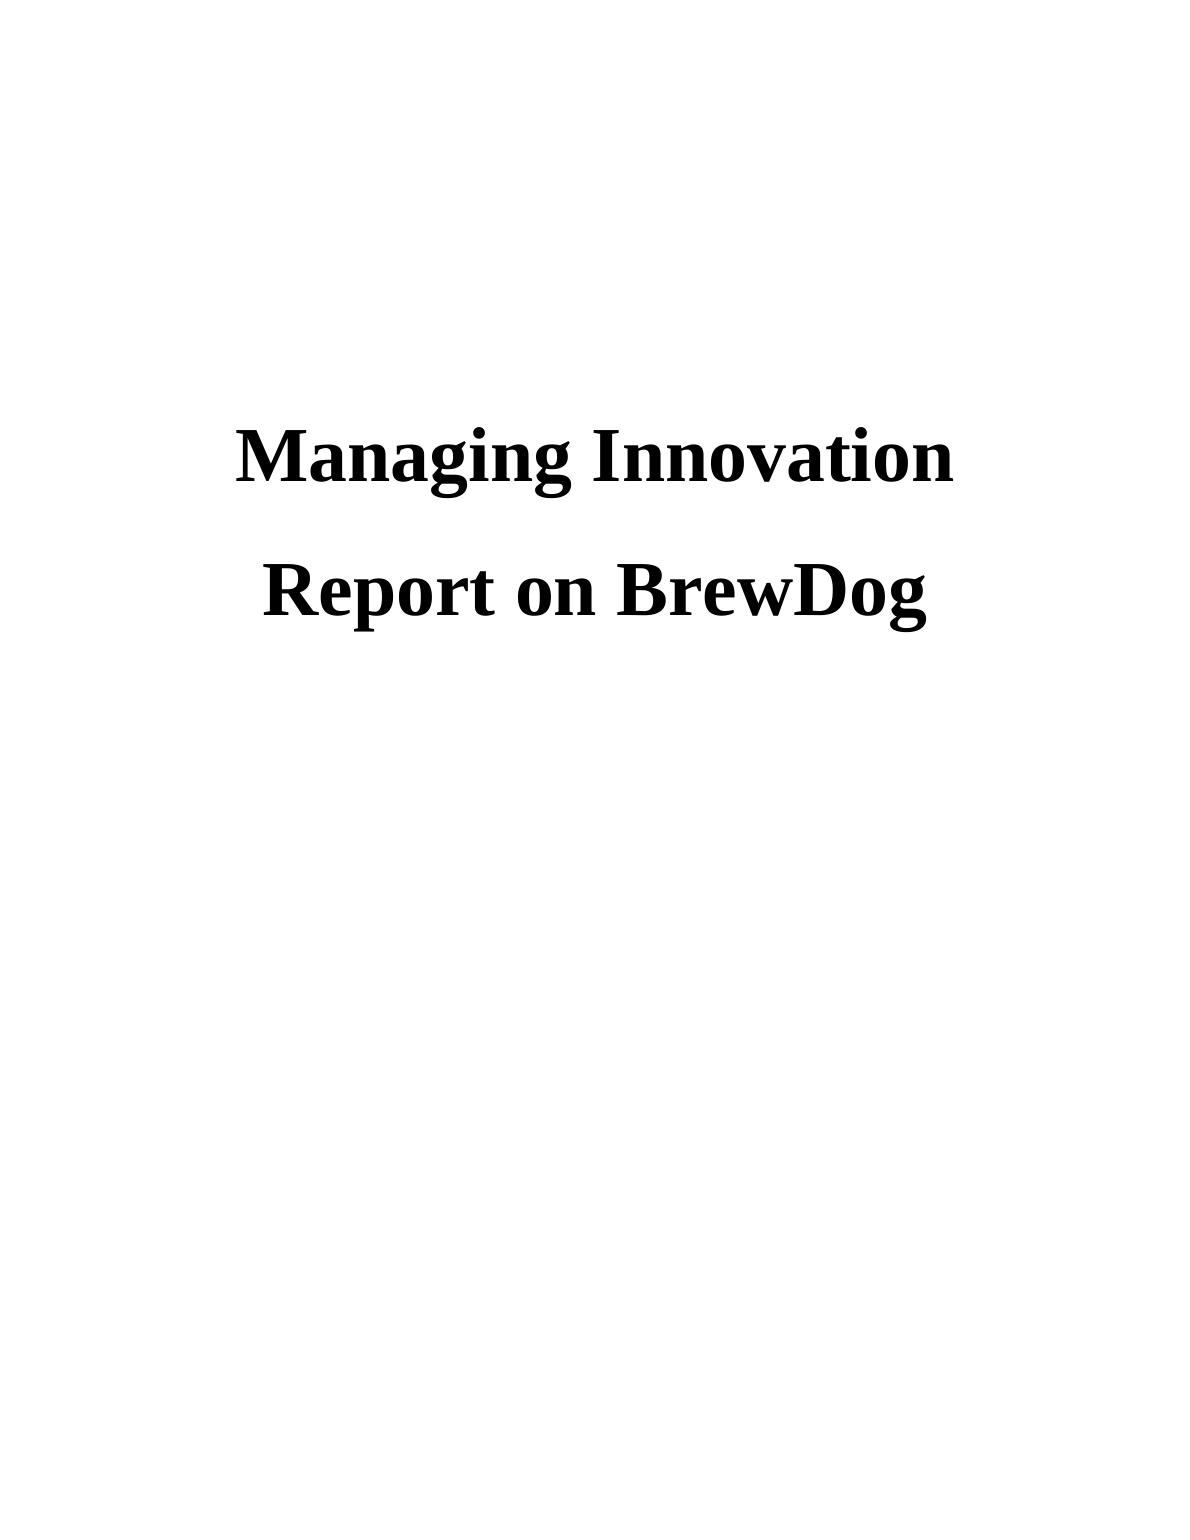 Managing Innovation: Report on BrewDog_1